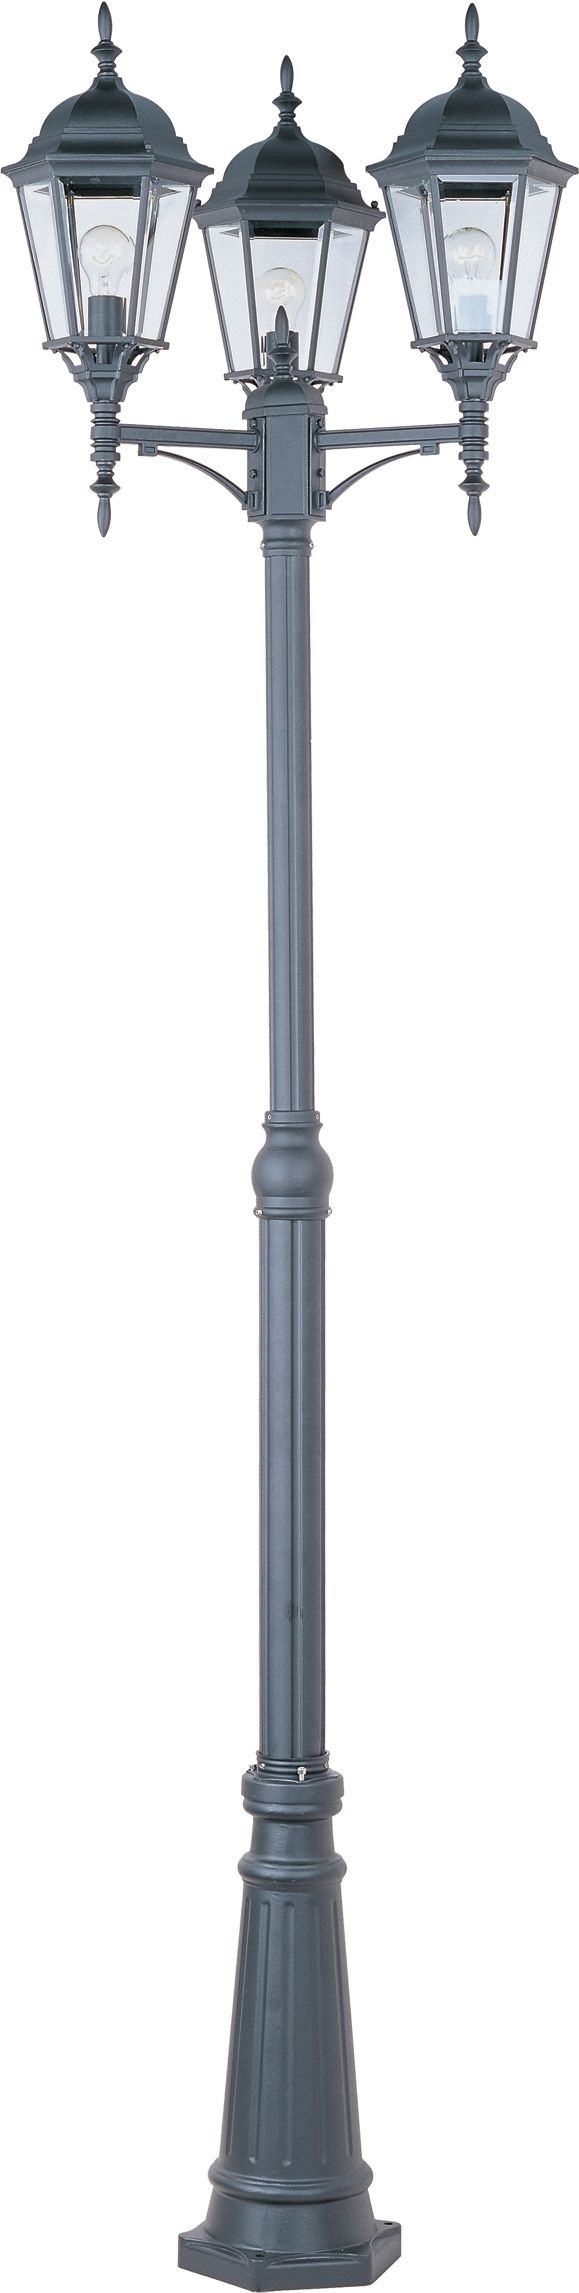 Outdoor Post Lights Outdoor Lamp Posts Outdoor Pole Lighting With Regard To Outdoor Led Post Lights Fixtures (View 15 of 15)